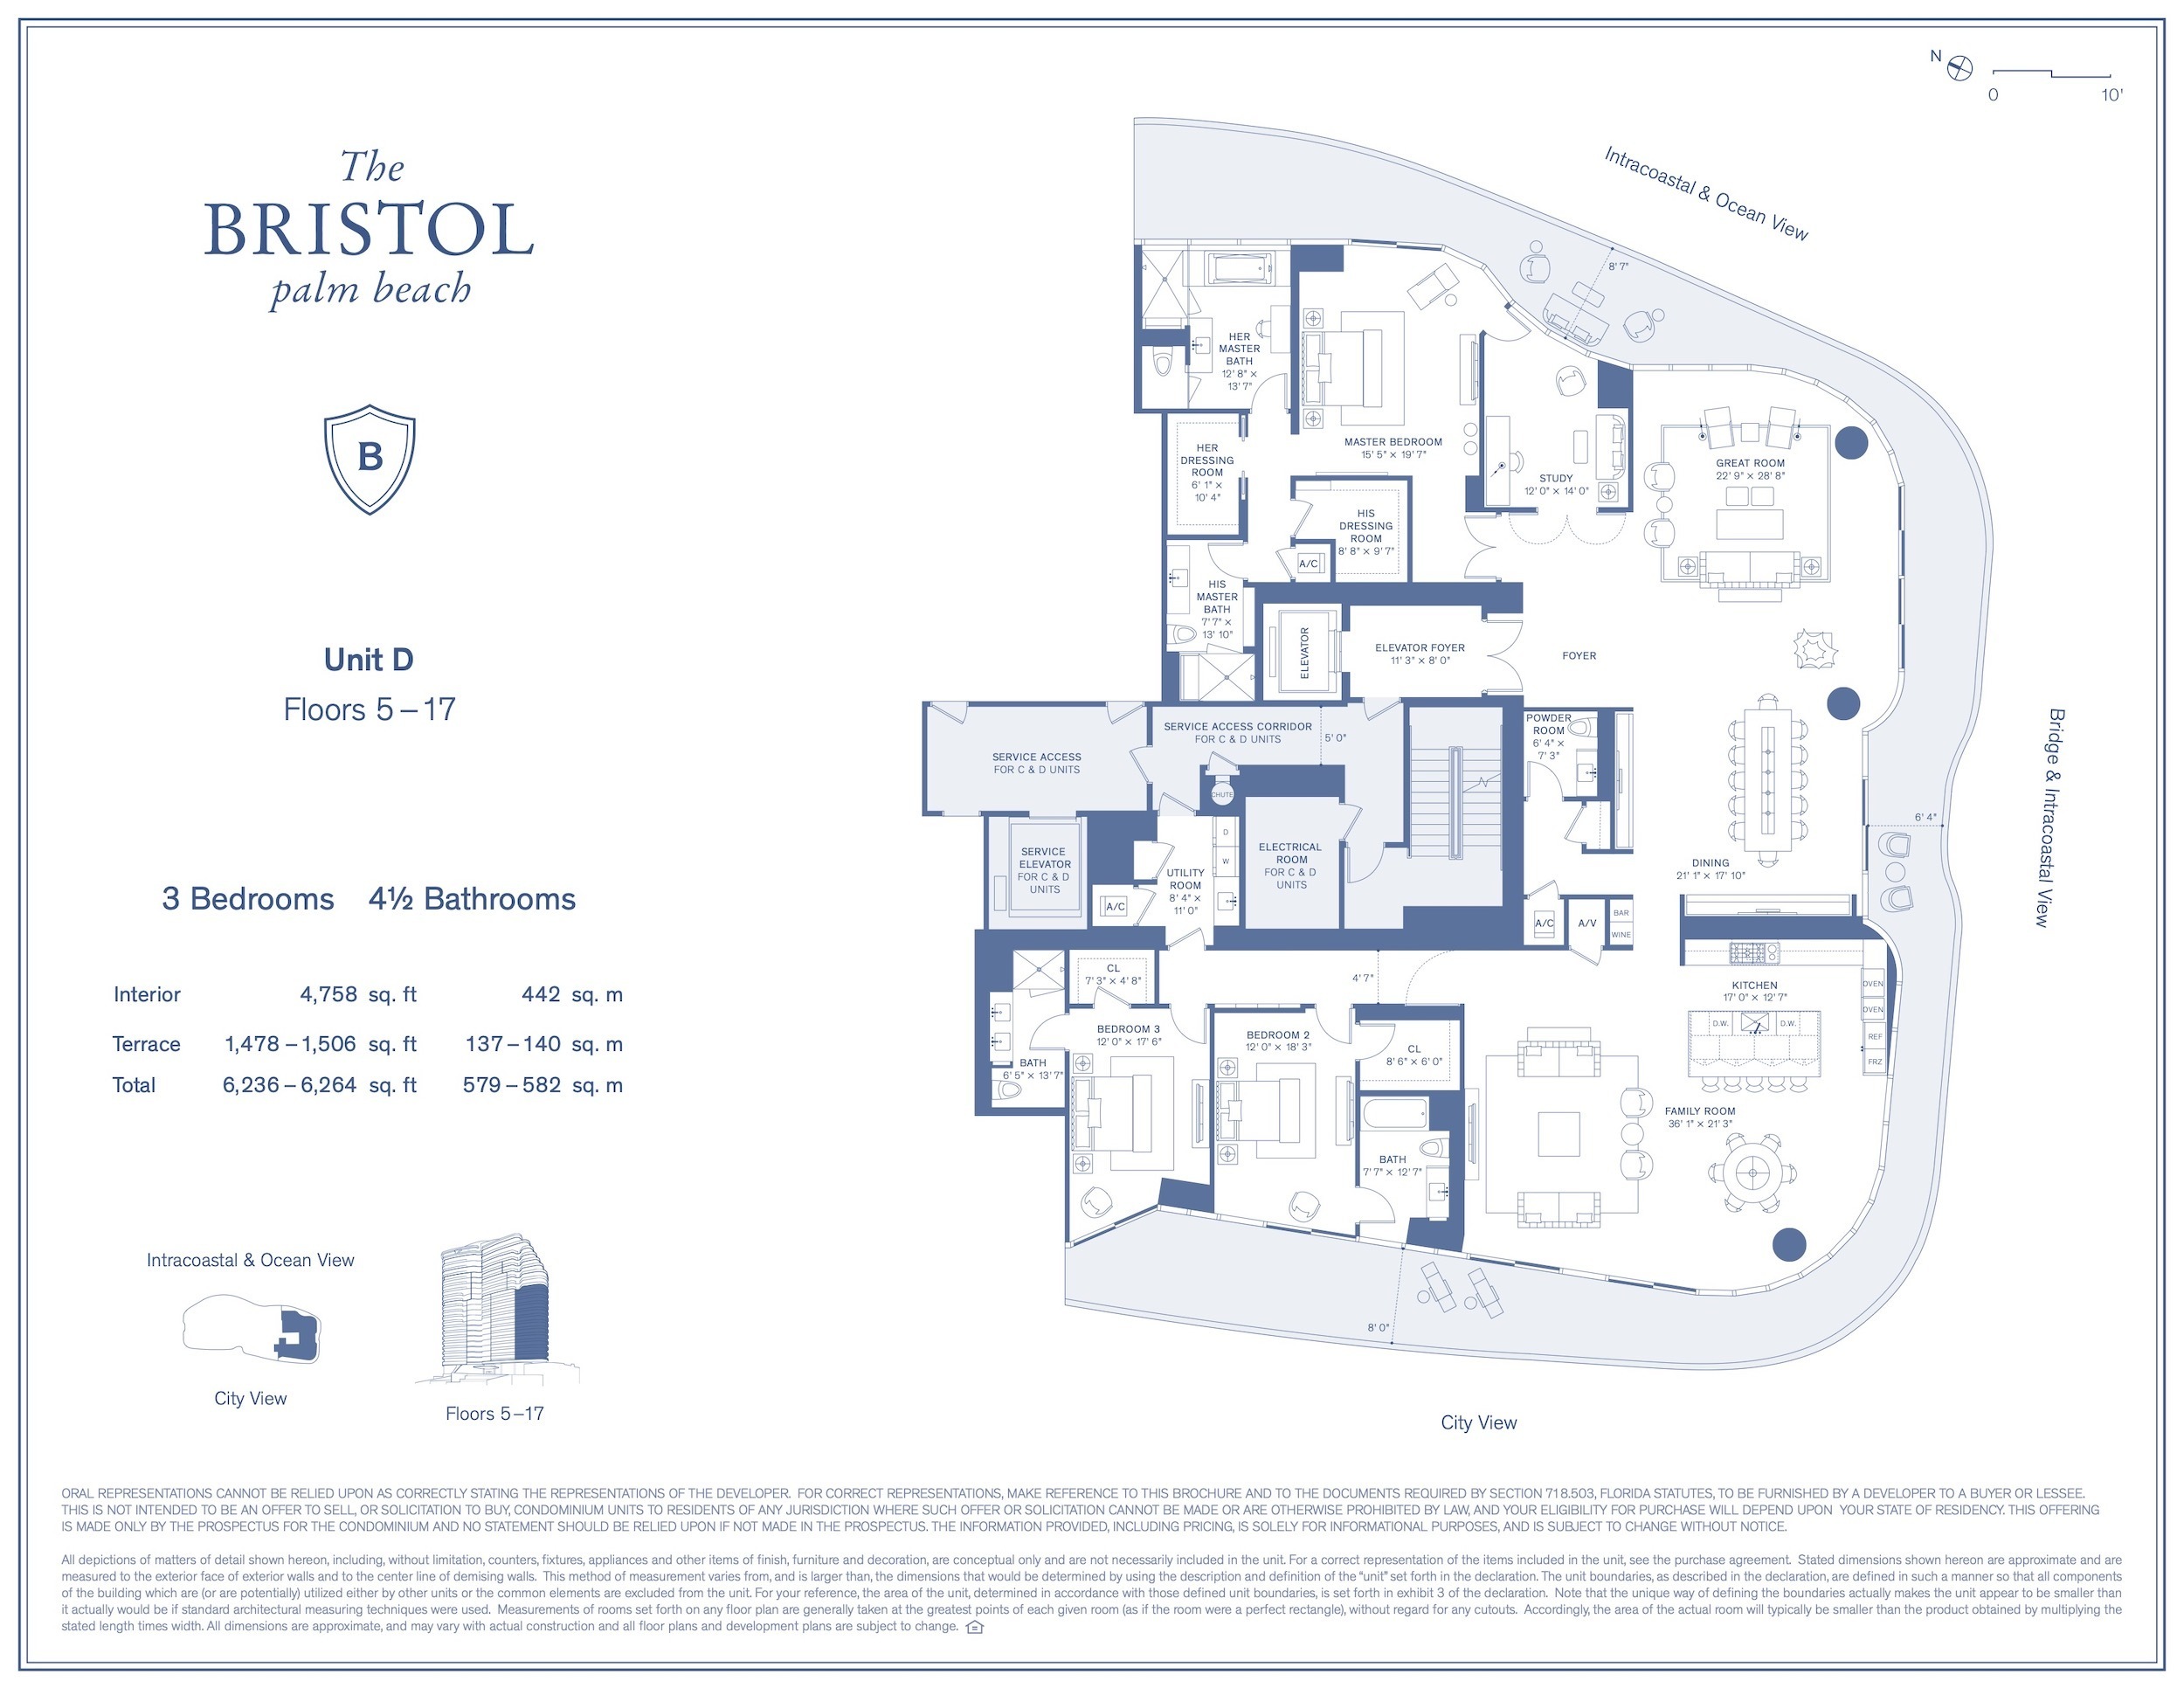 Floor Plan for The Bristol Palm Beach Floorplans, D Floors 5-17